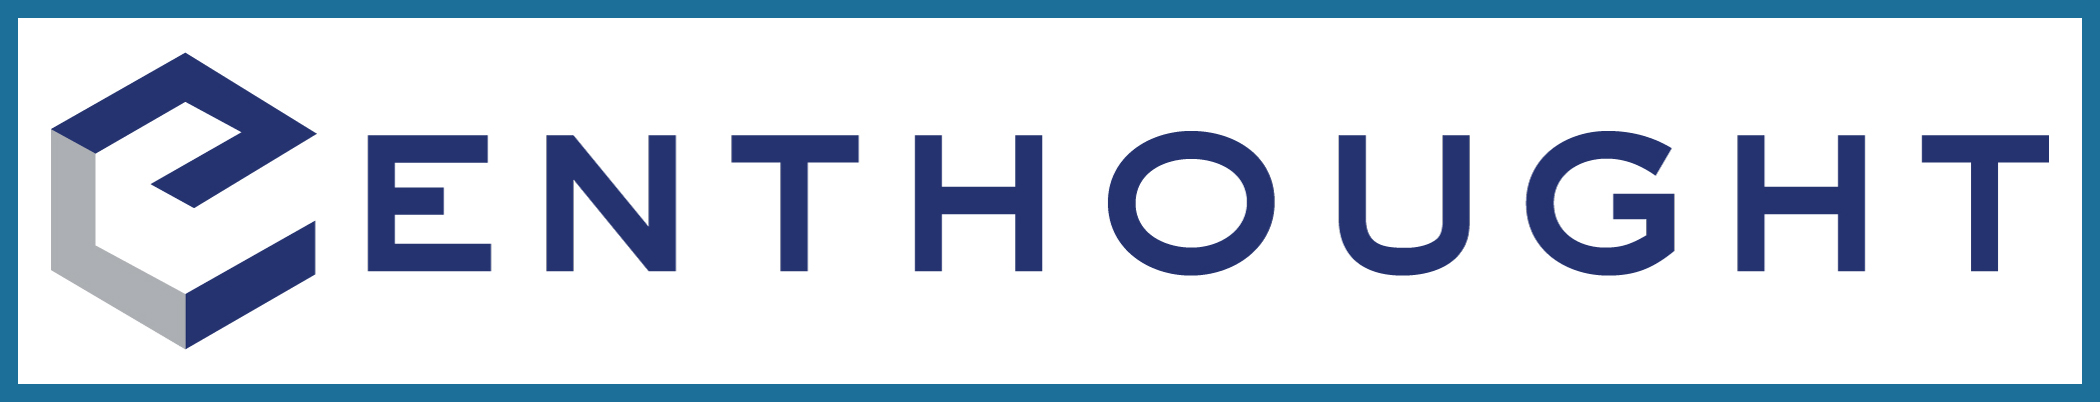 Journyx timesheet Enthought-Logo-Horizontal-Blue-Grey-2000x302.jpg  by Enthought